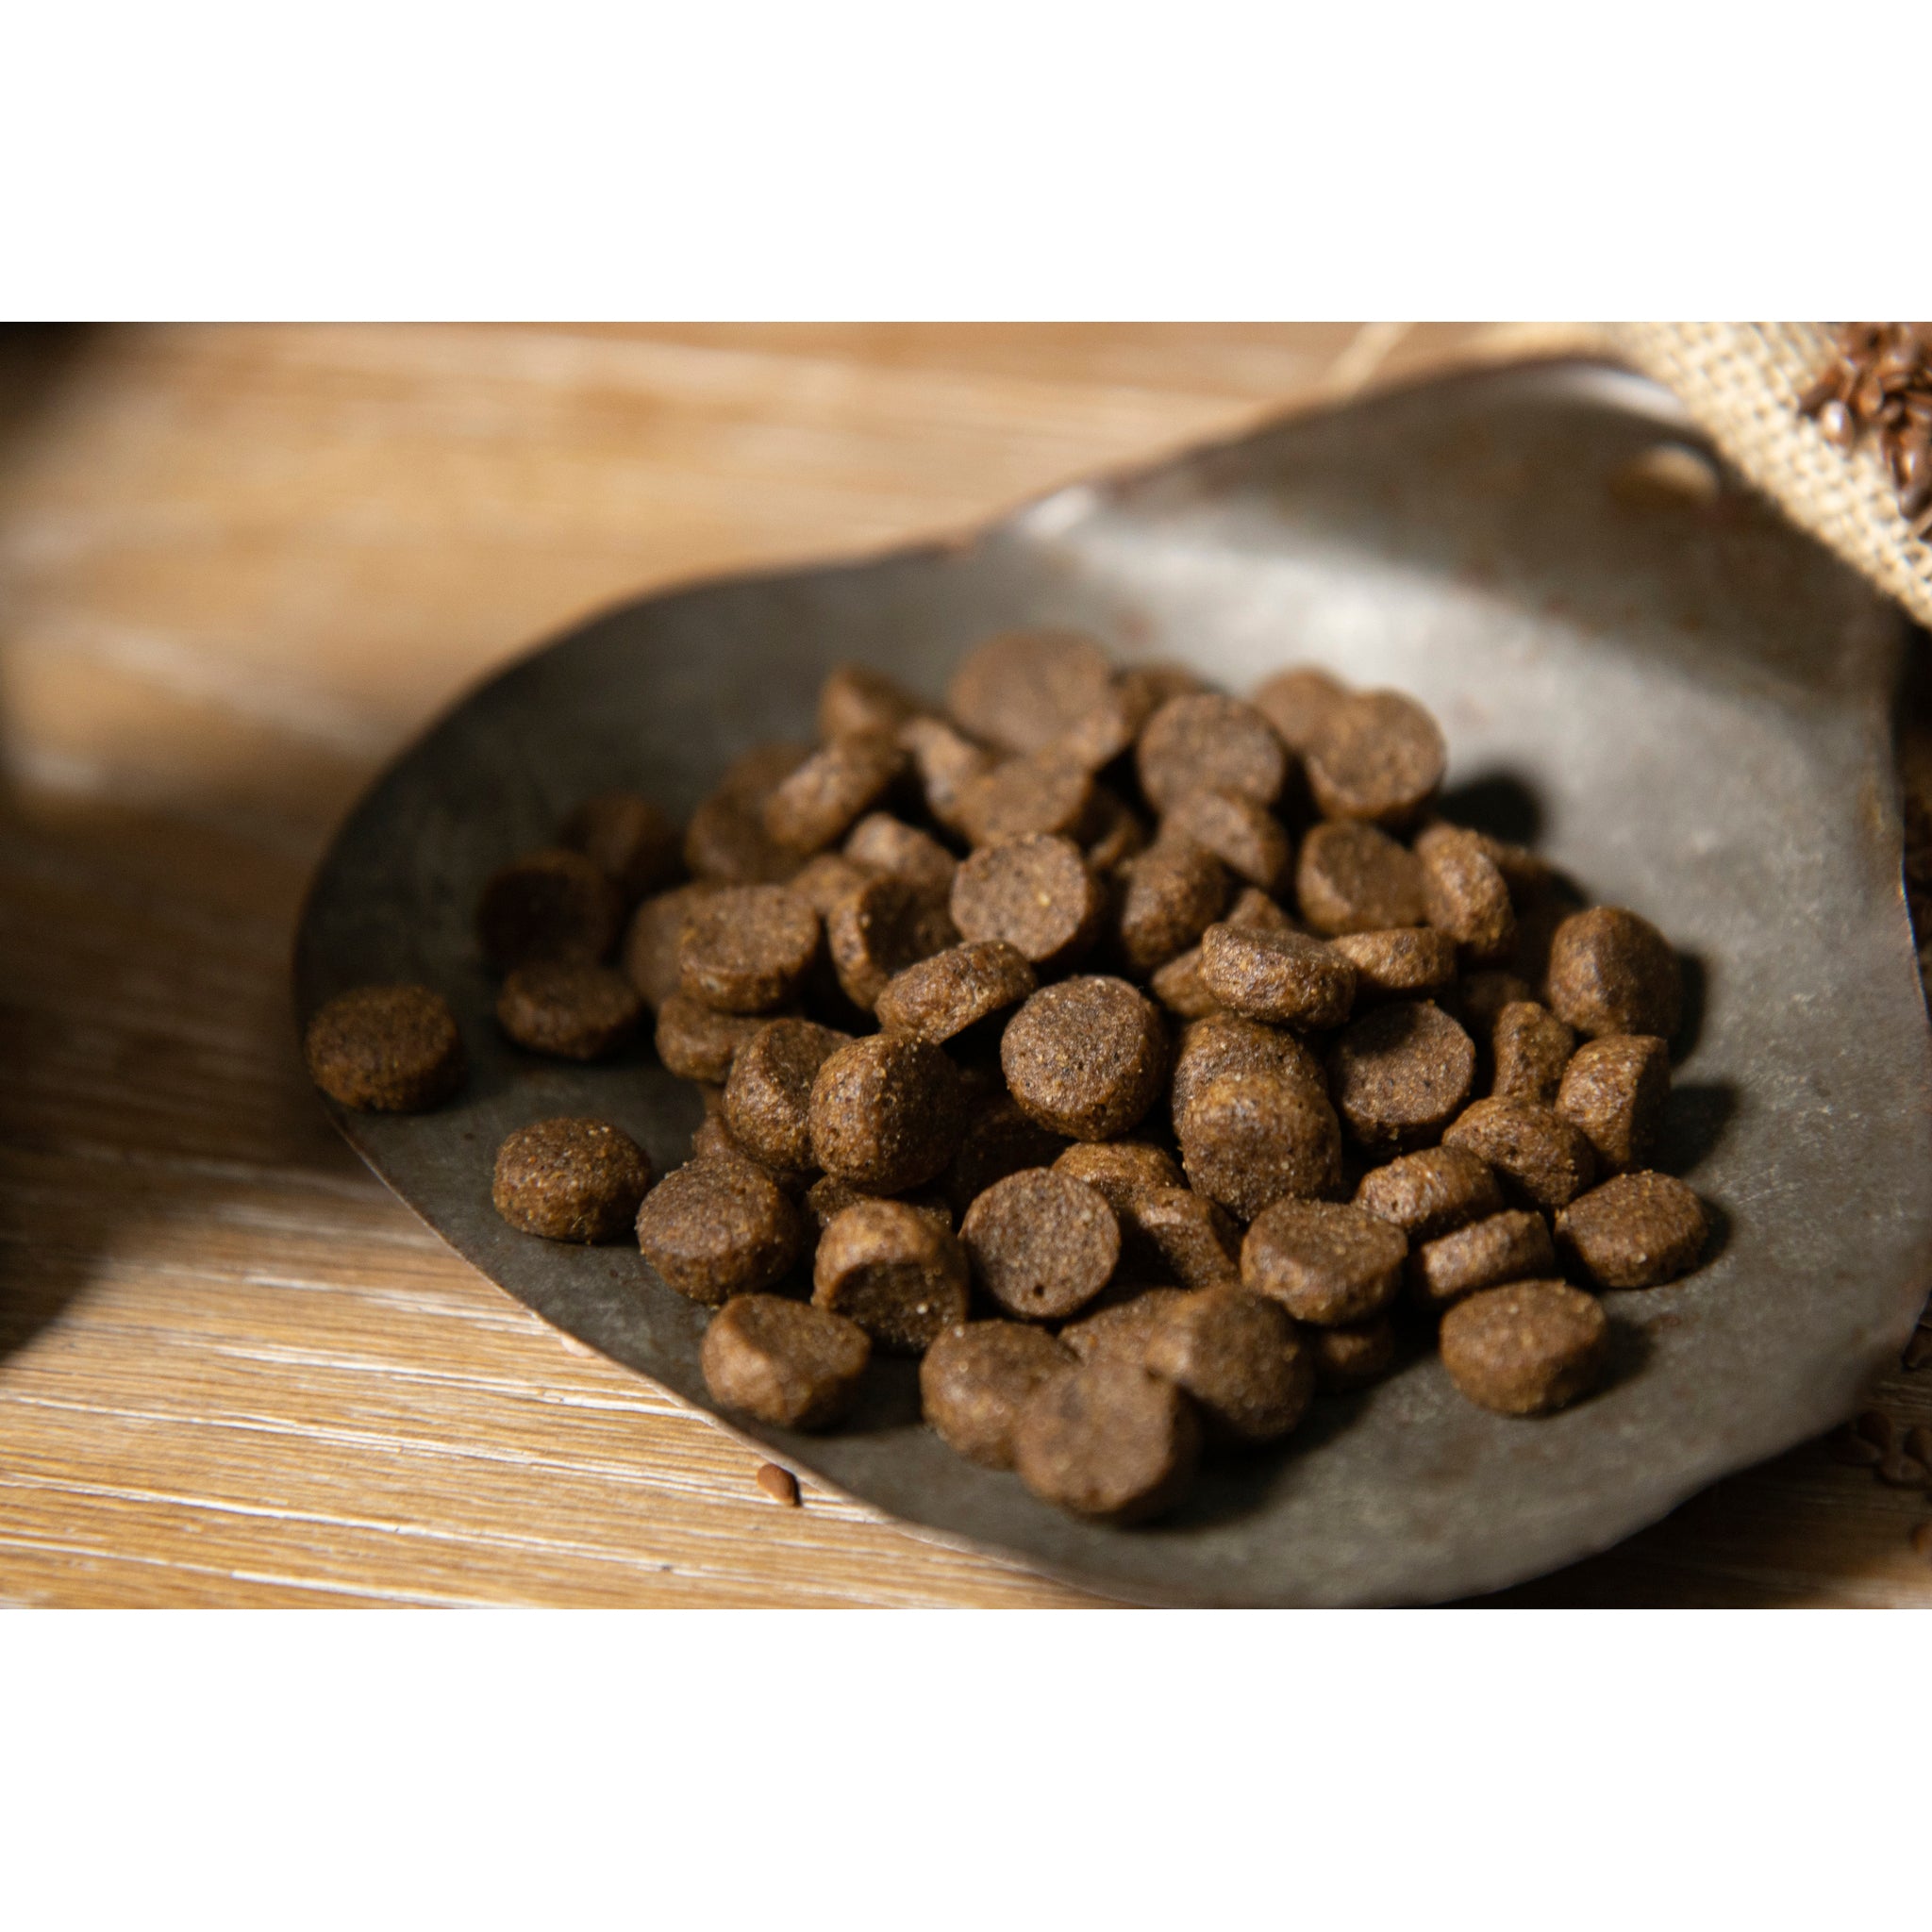 Regal Grain-Free Red Meat Recipe Dry Dog Food